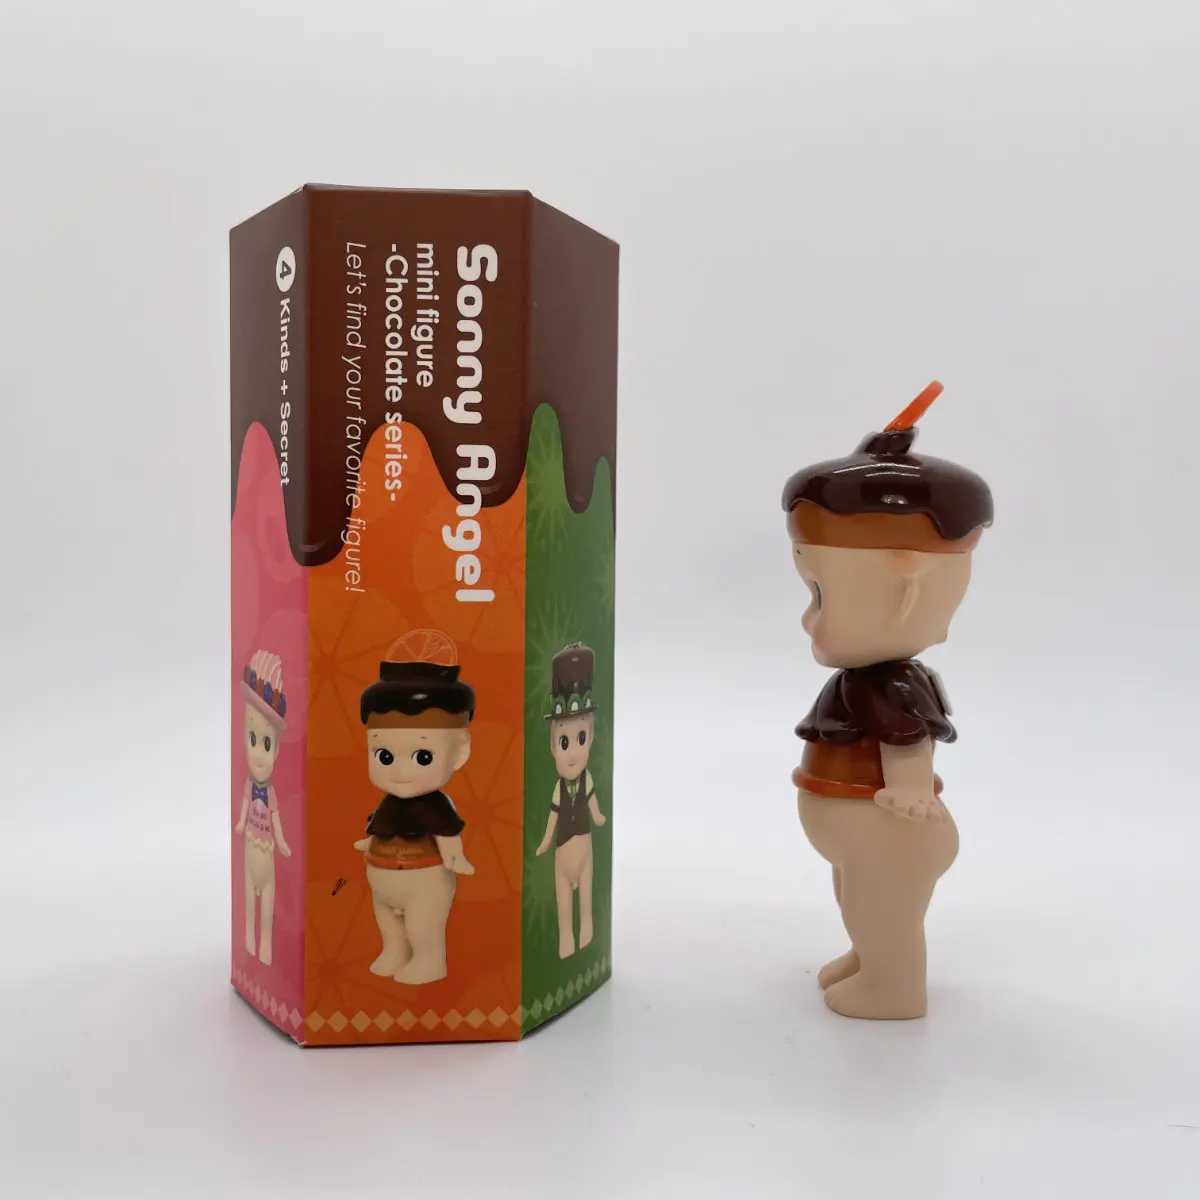 Blind Box Mini Figure Chocolate Series 2016 Blind Box Toy for Girl Mystery Box Kiwi Berry Strawberry Orange Chocolate T240506